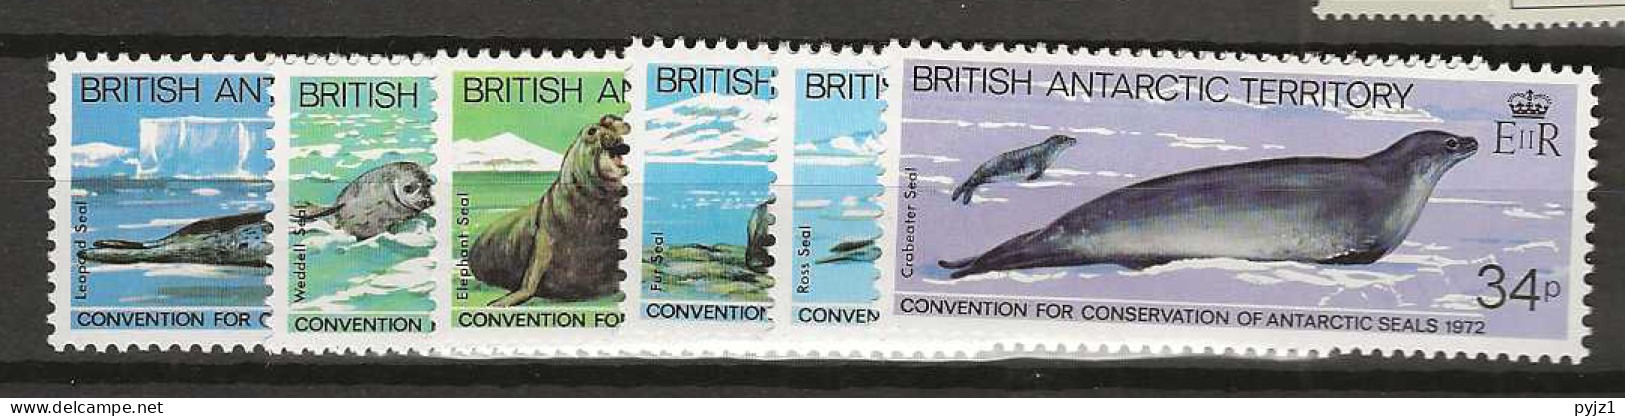 1983 MNH British Antactic Territory, Mi 98-103 Postfris** - Unused Stamps